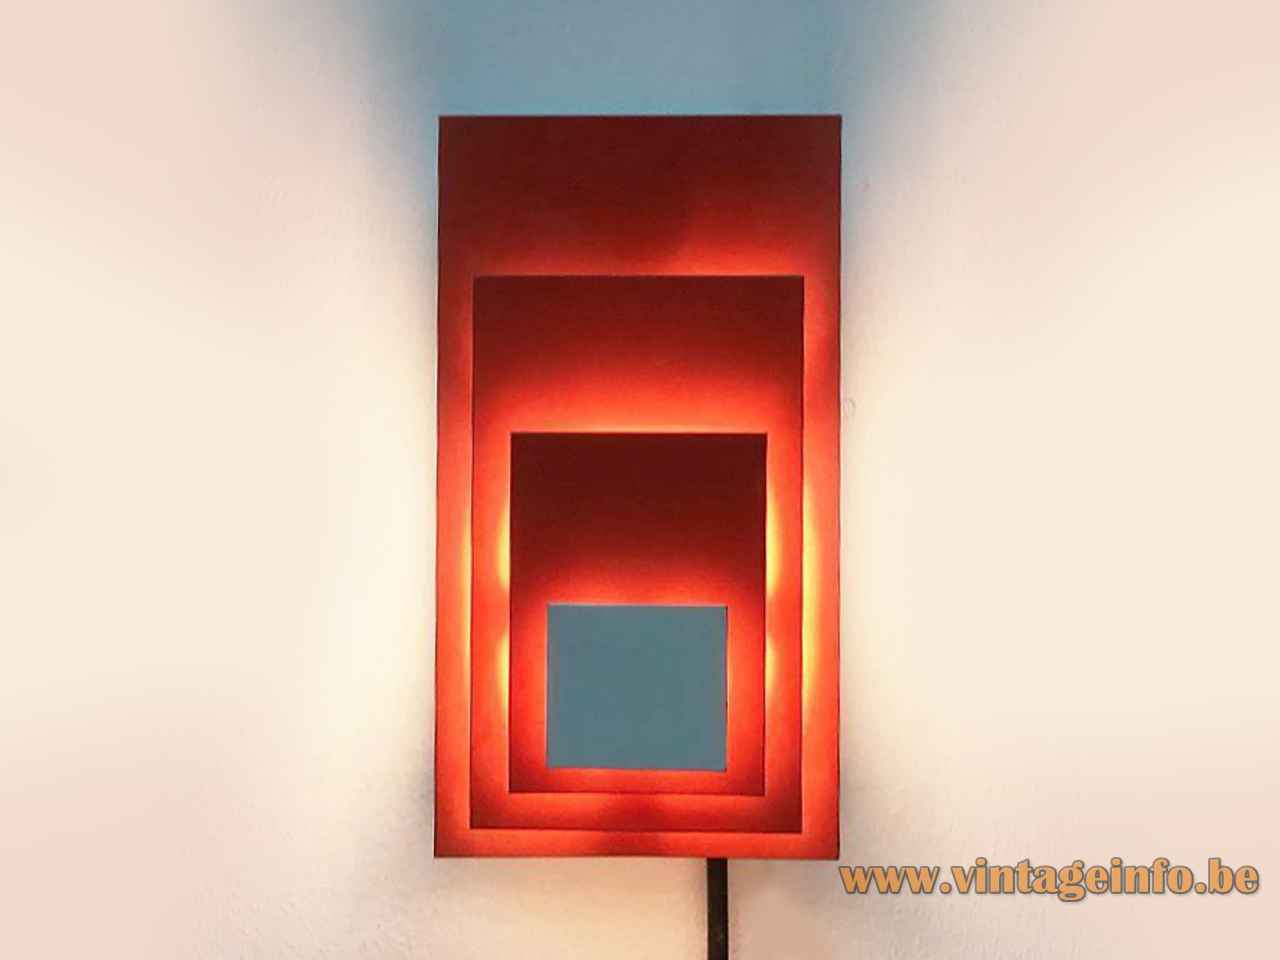 Hillebrand wall lamp 8578 rectangular orange & white painted metal lampshade 1970s Germany E14 lamp socket